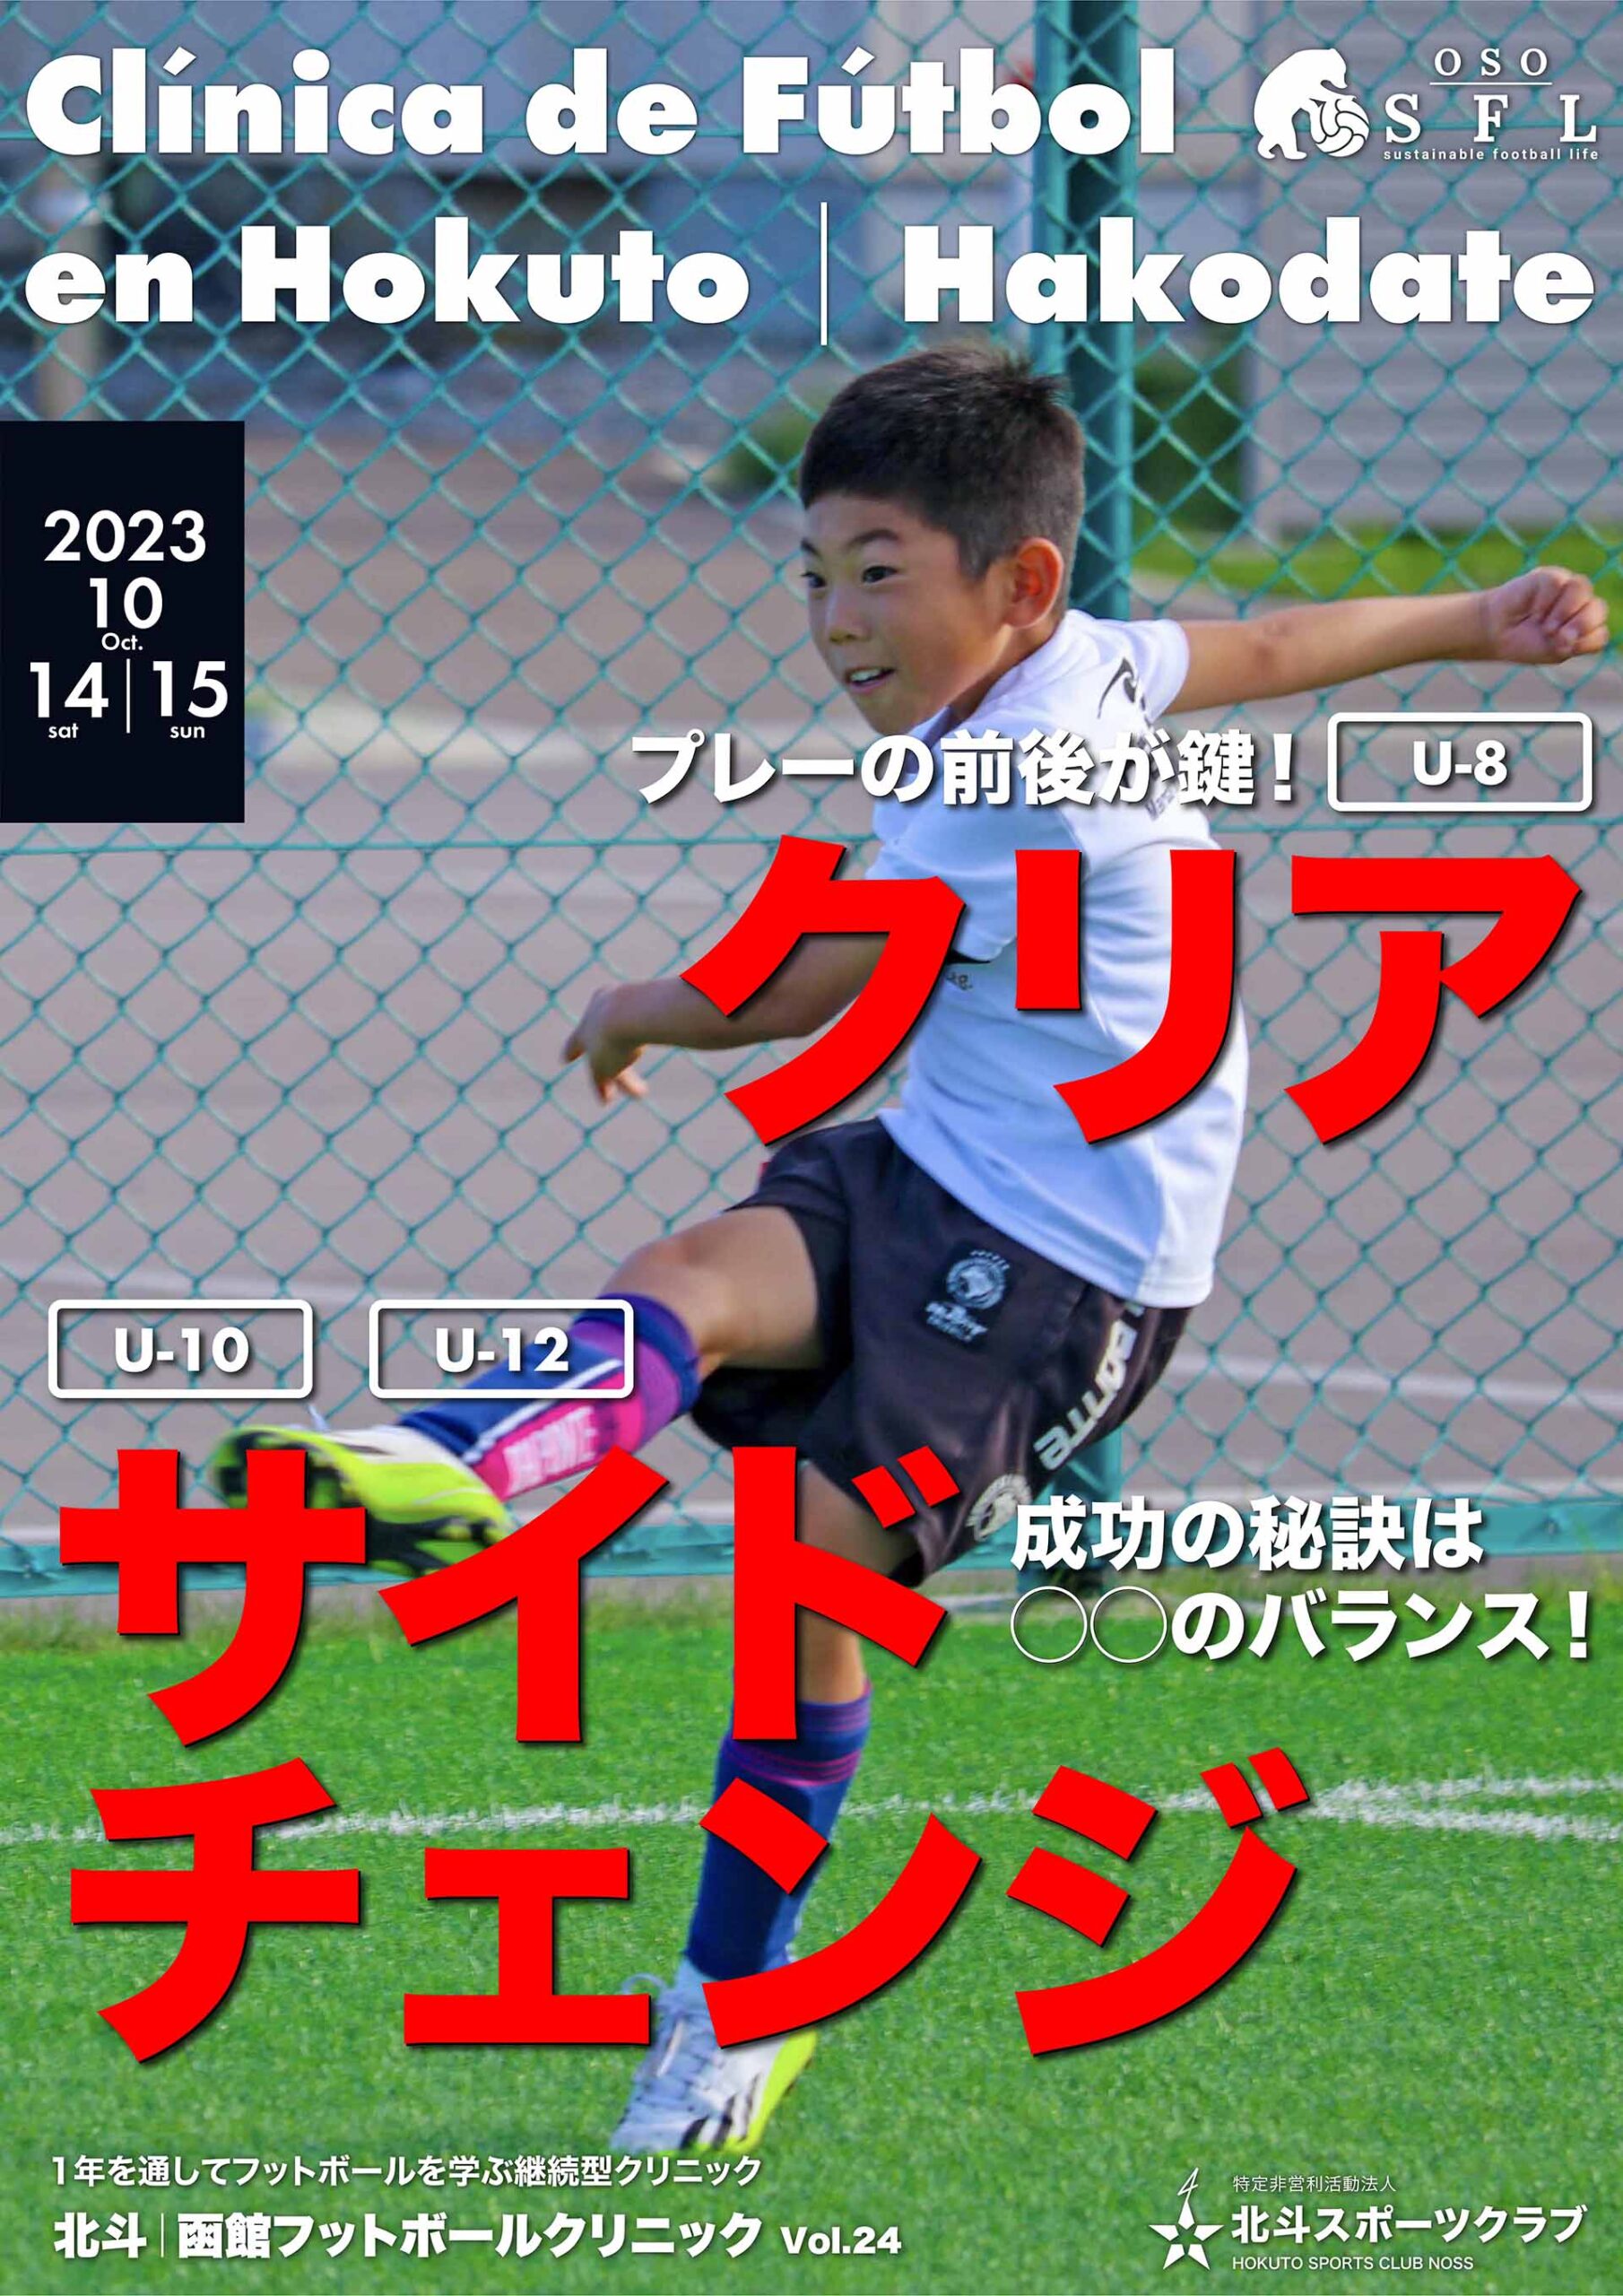 20230927_notice-hokuto-hakodate-football-clinic-2023-vol24_A4-02-min